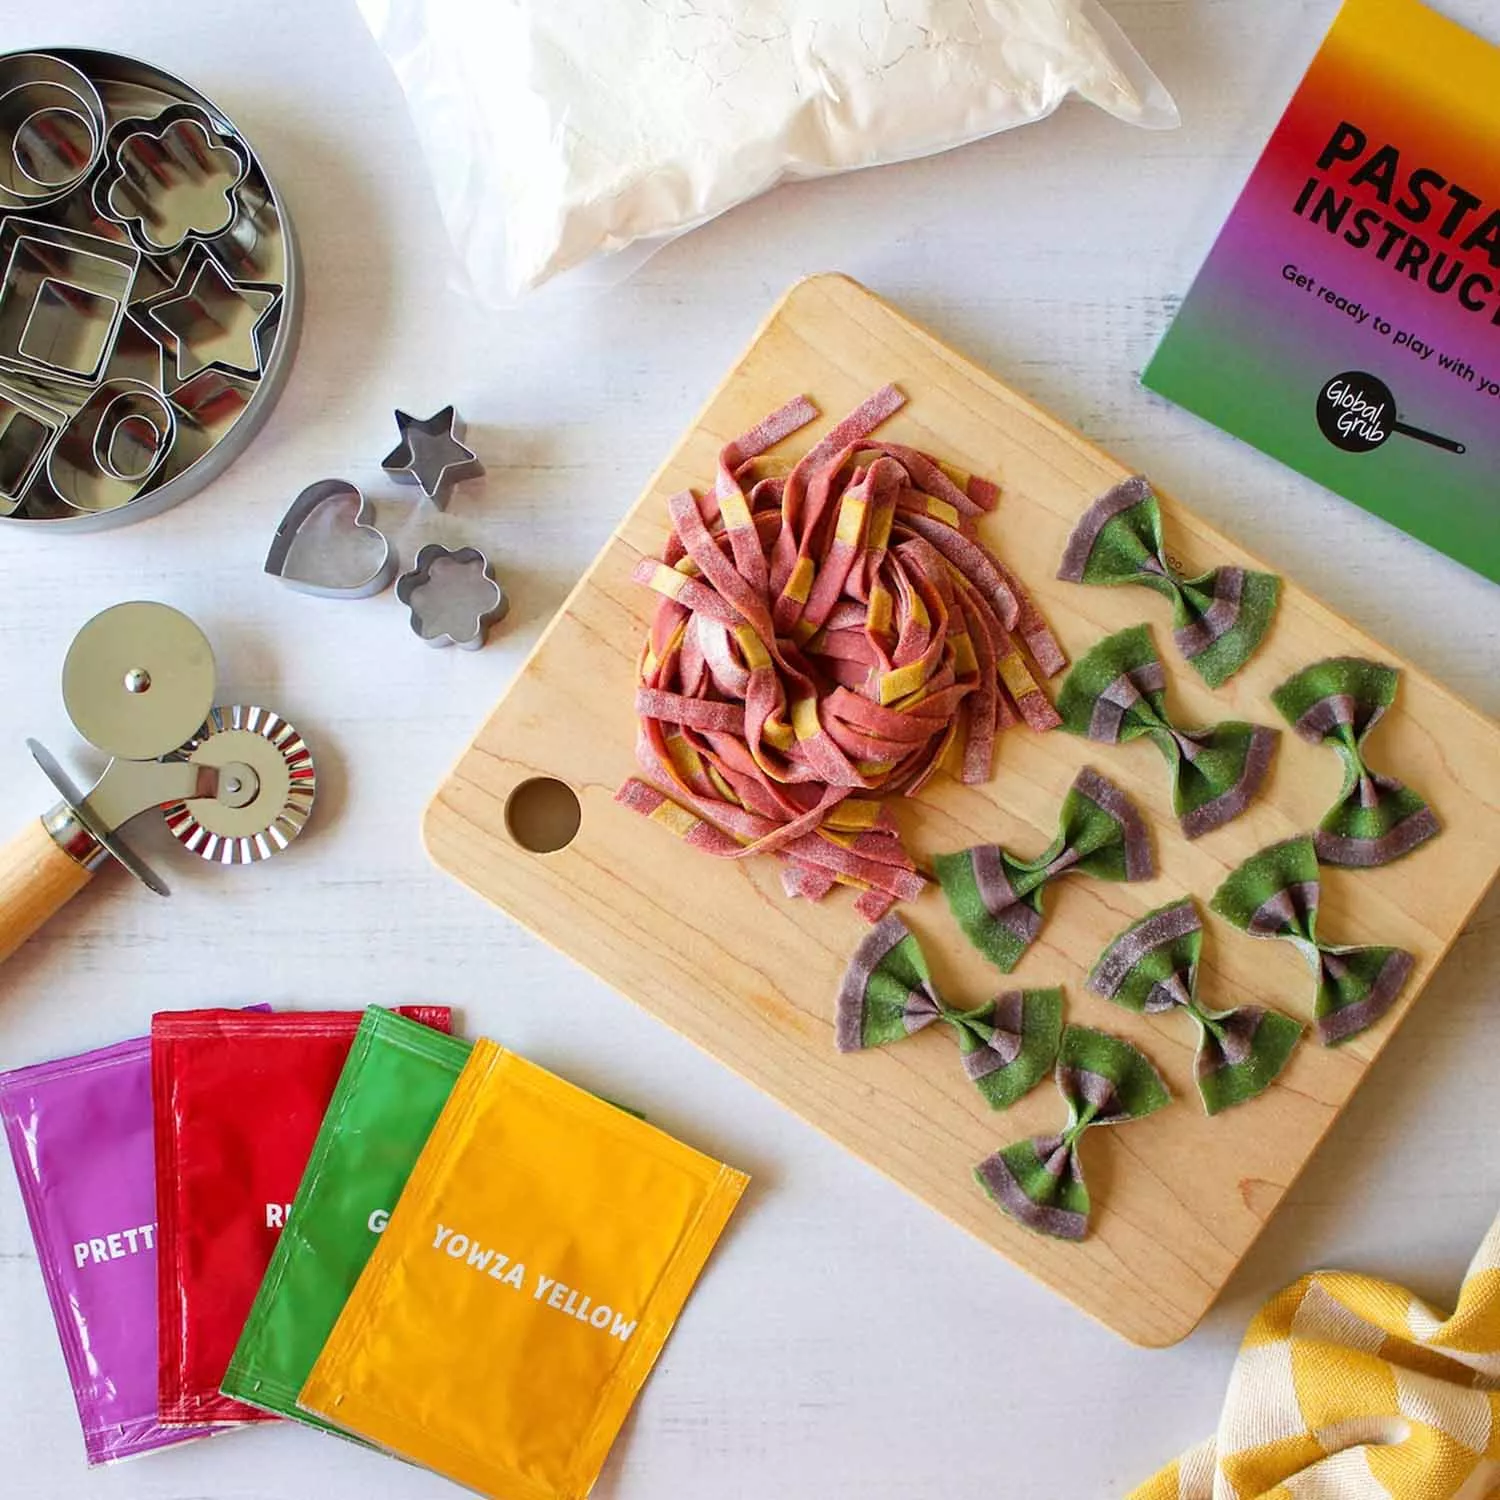 Global Grub Pasta Art Kit